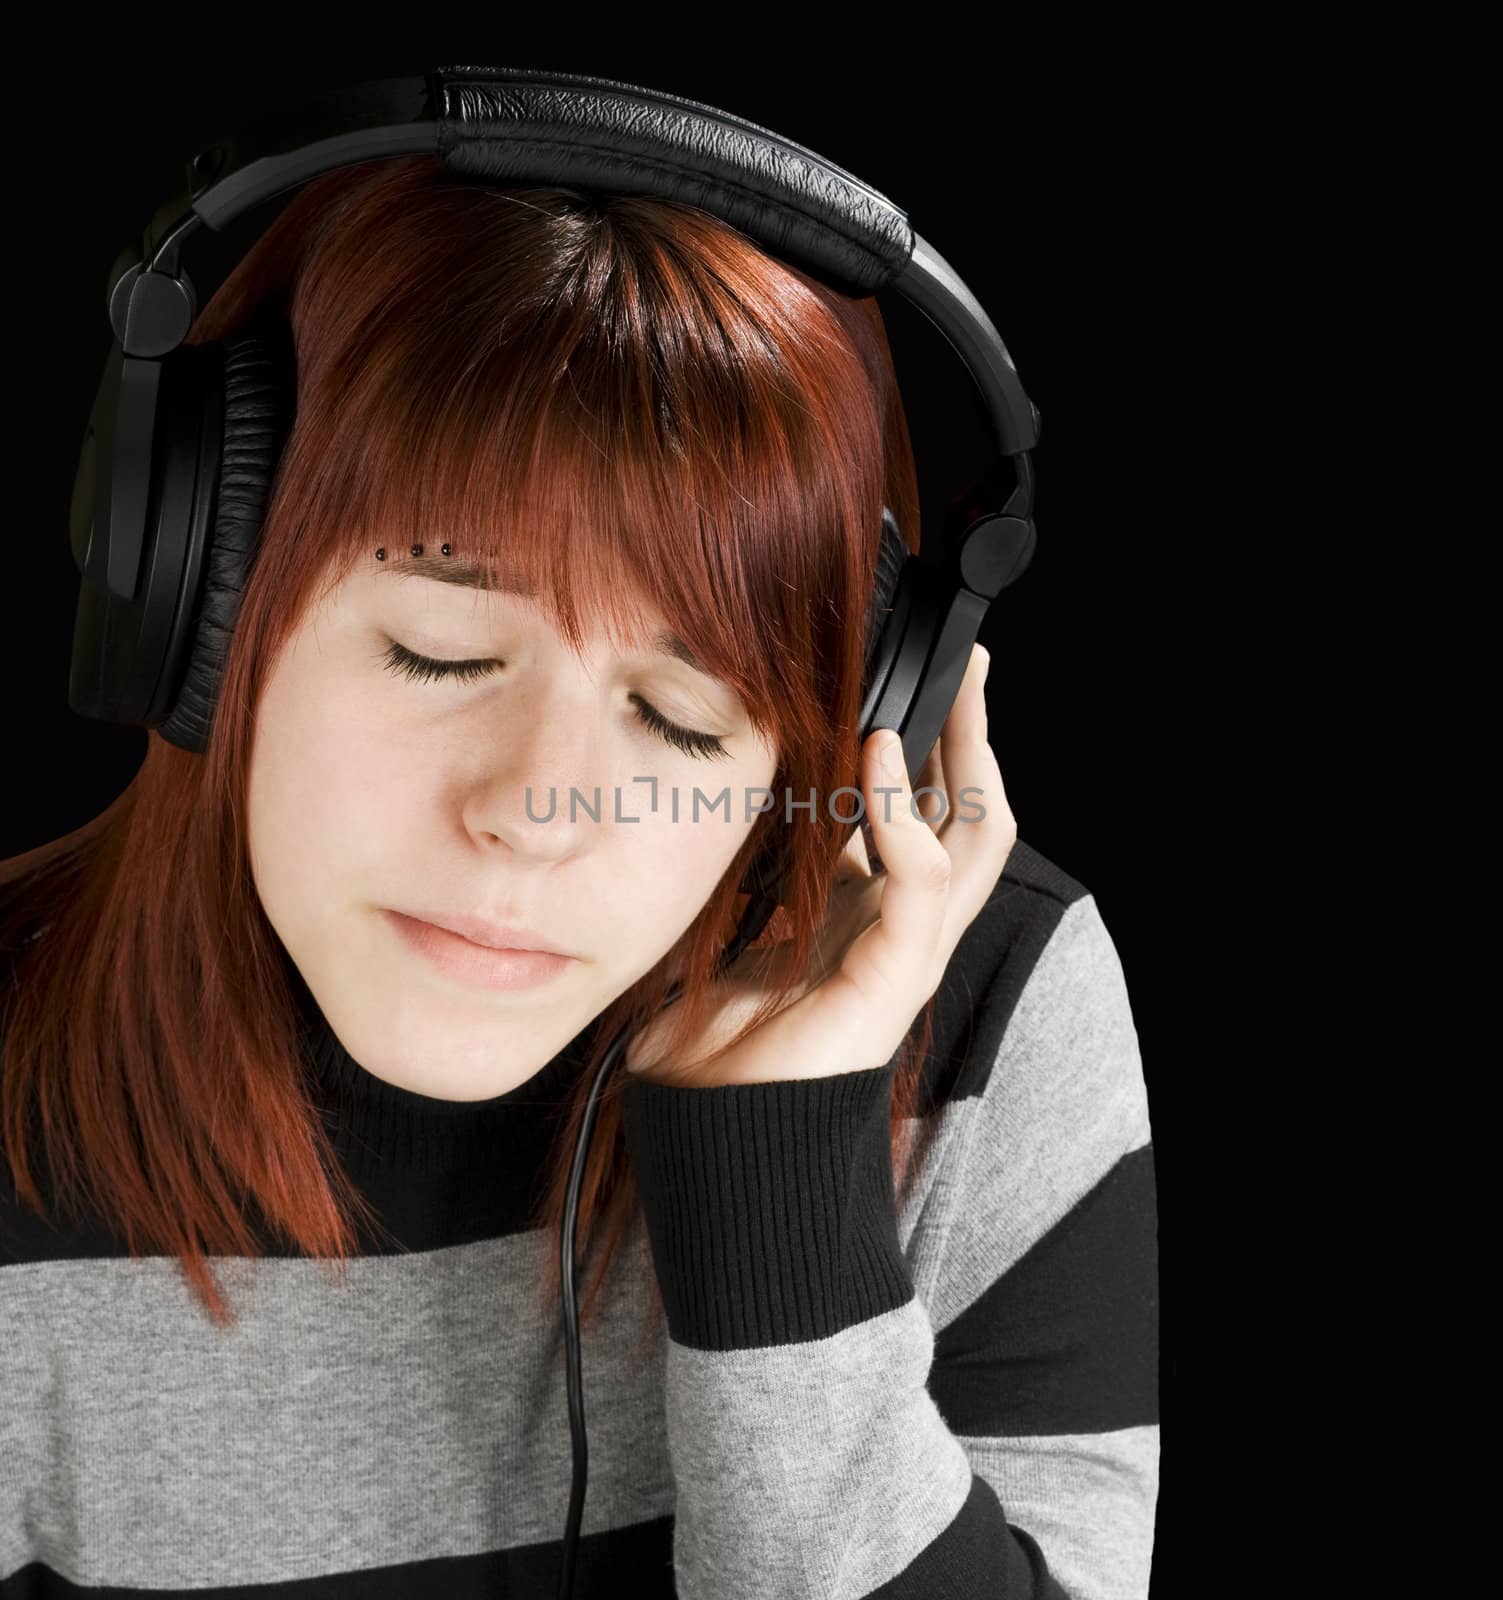 Beautiful redhead girl listening to music on headphones.

Studio shot.